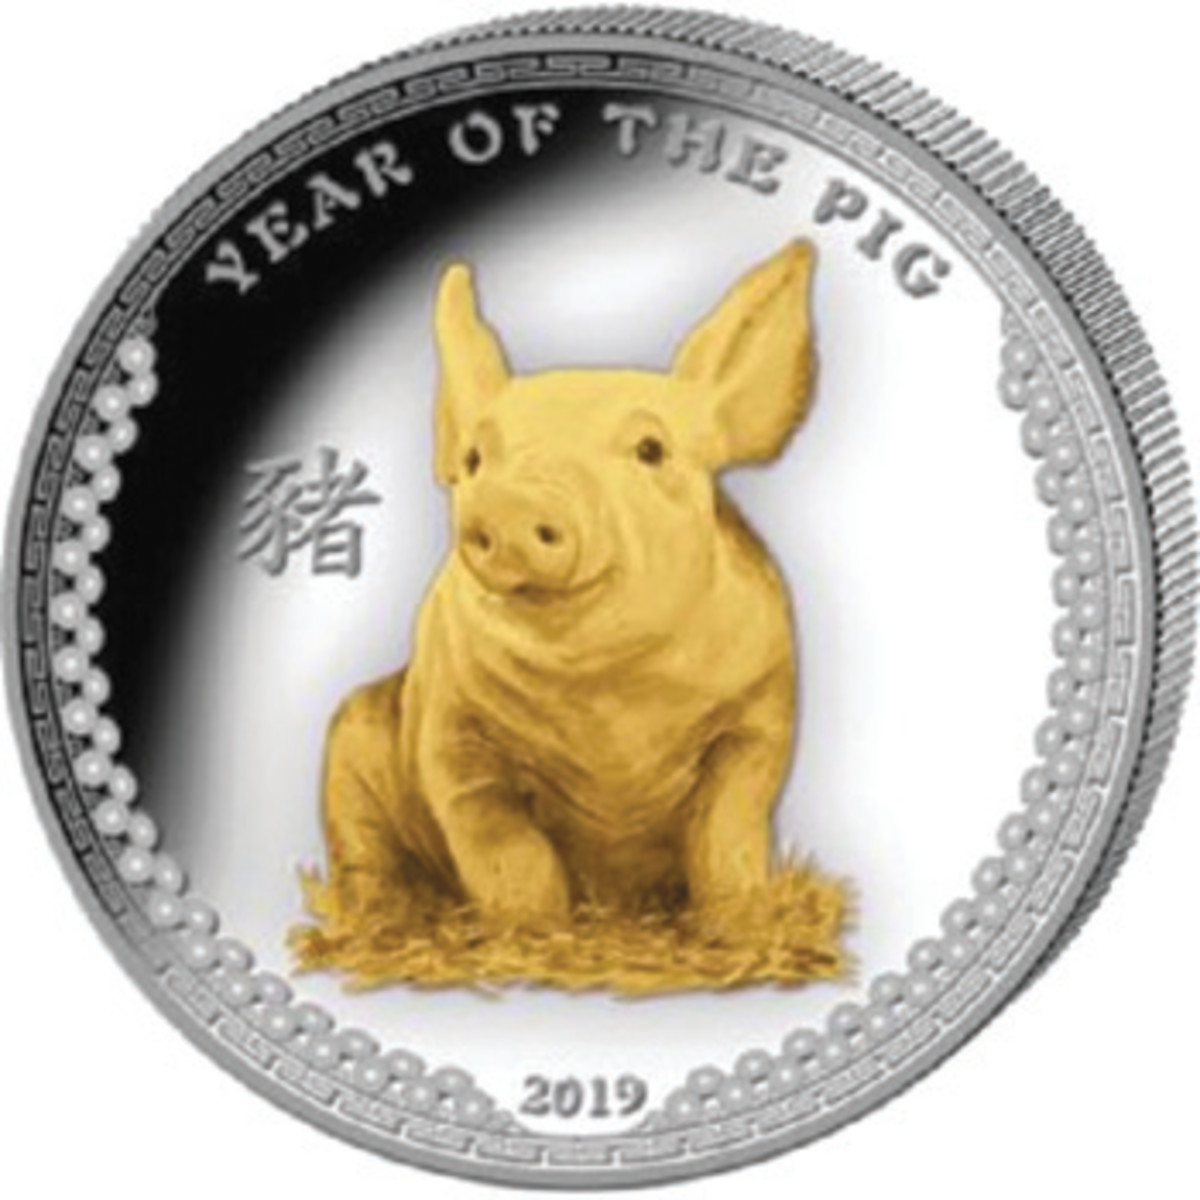 SKU#177977 2019 Canada 1/2 oz Proof Silver $10 Lunar Year of the Pig 